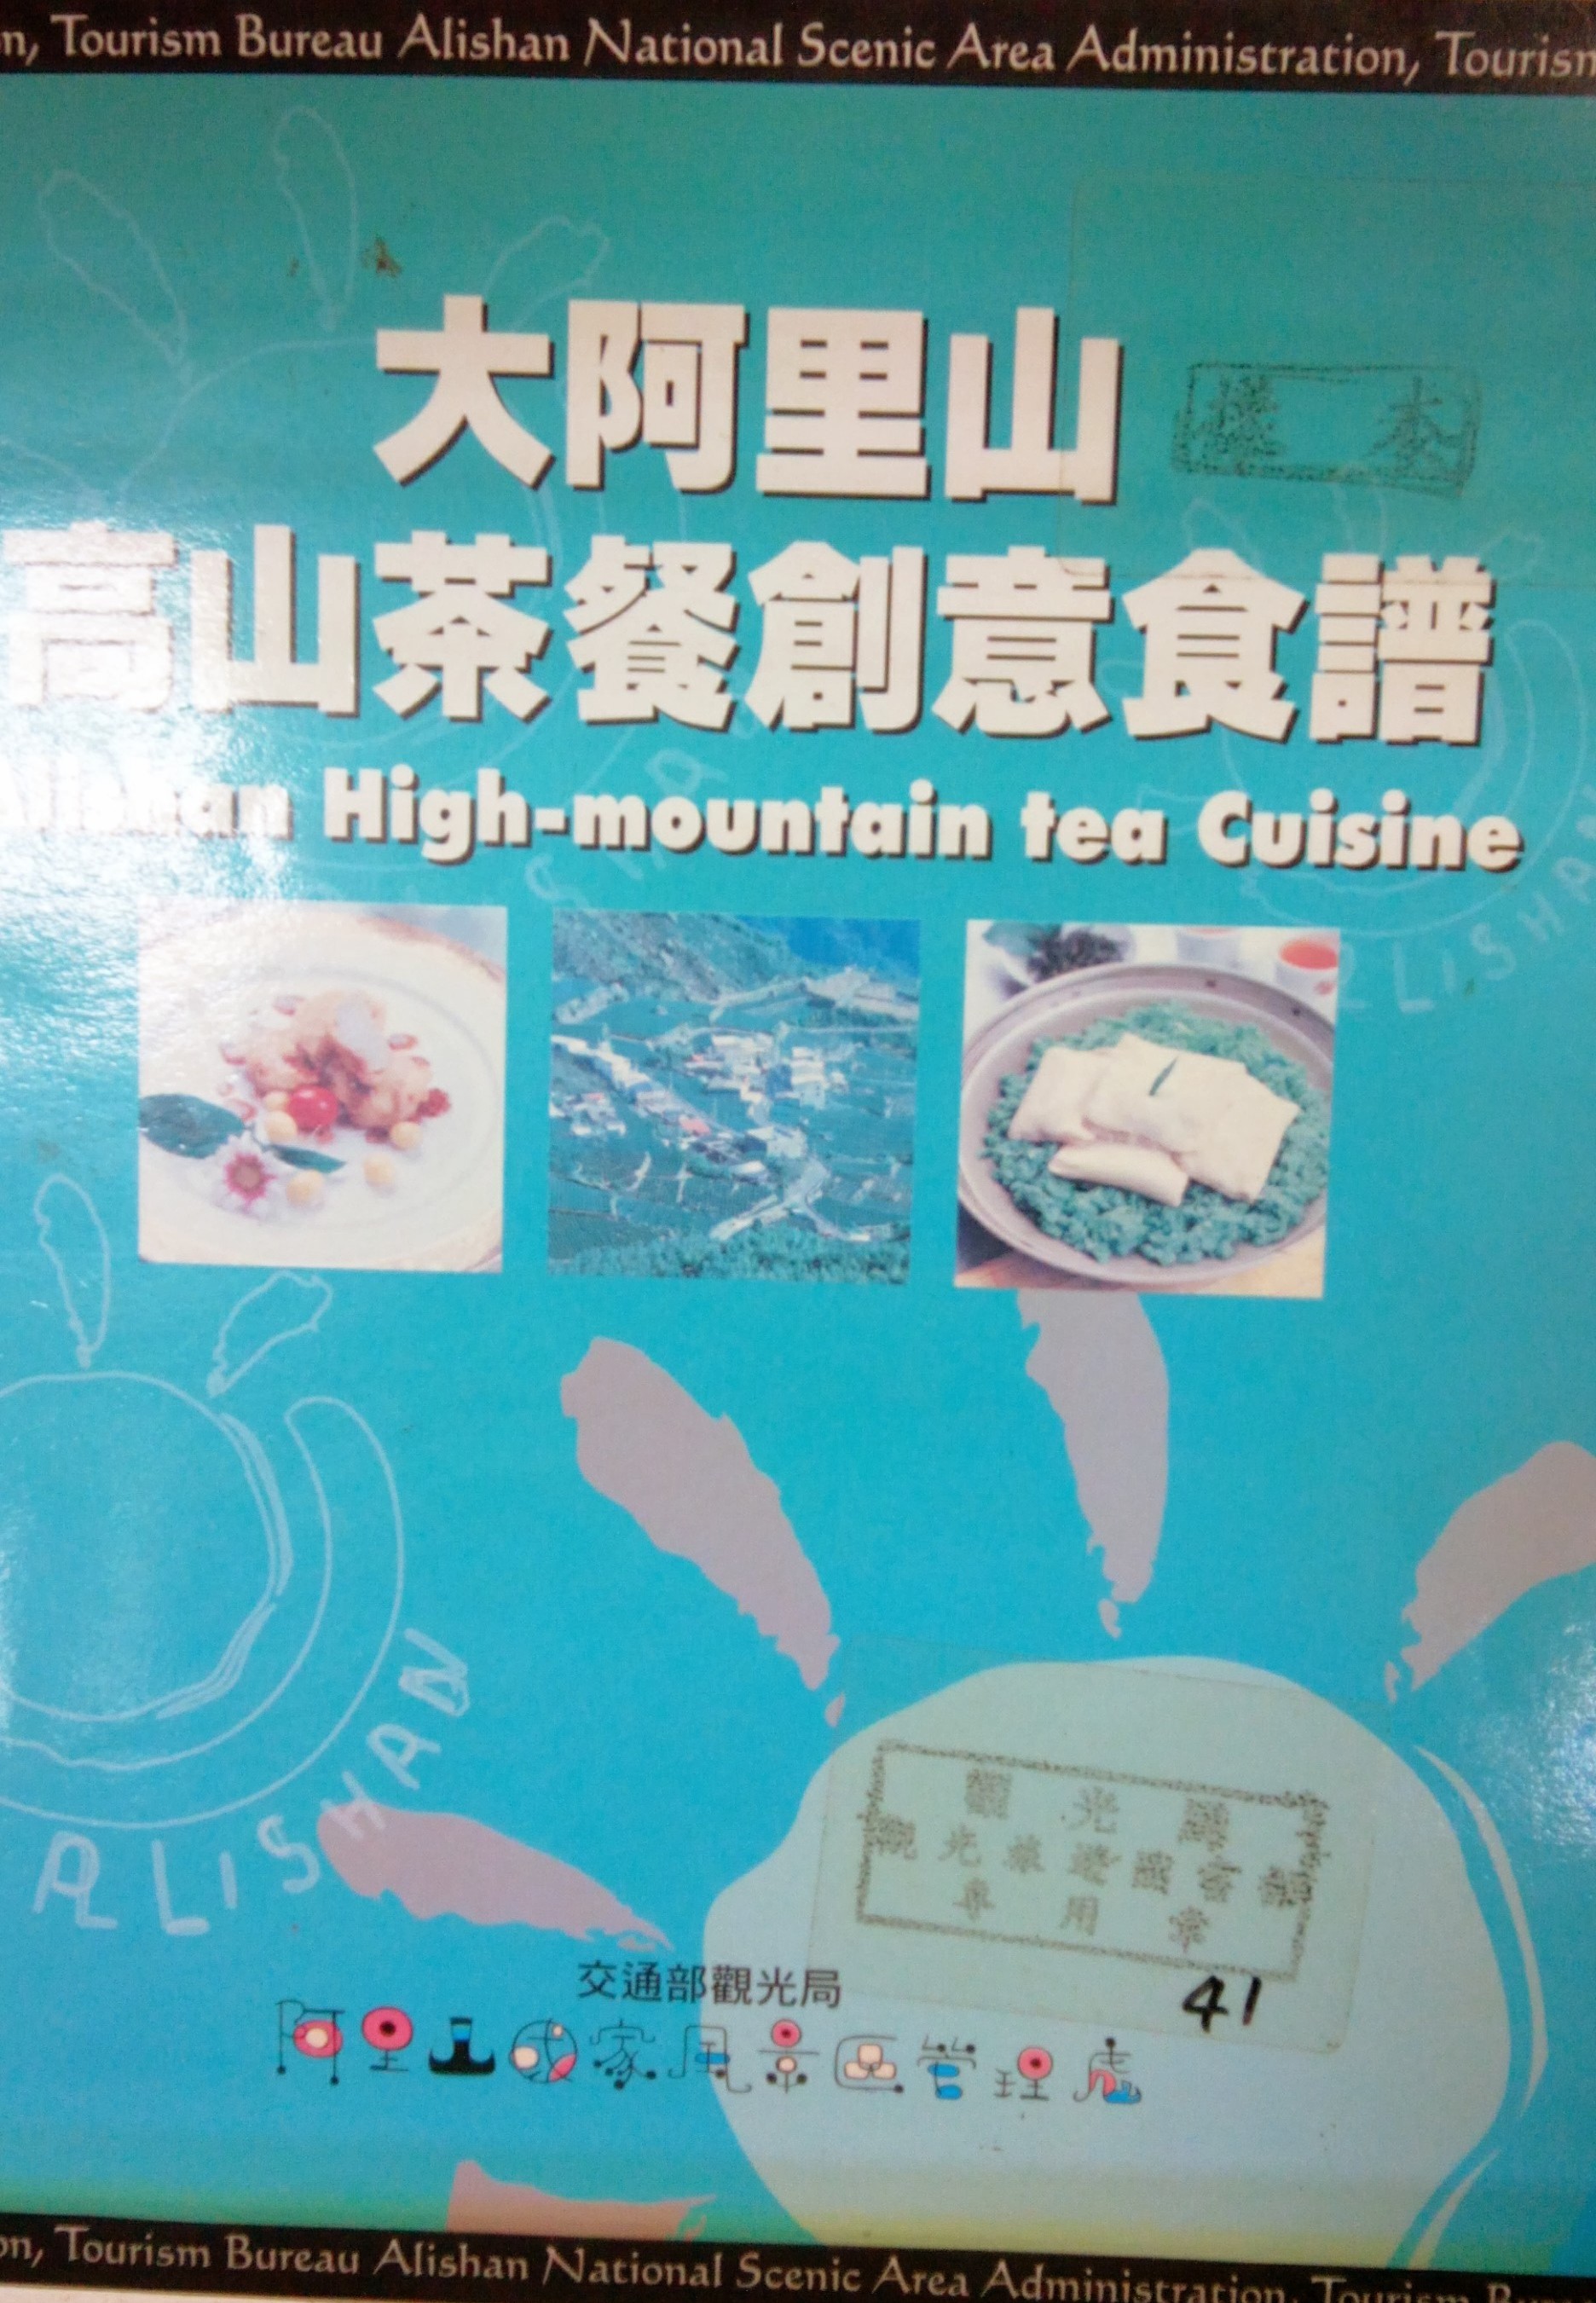 大阿里山高山茶餐創意食譜＝Alishan high-mountain tea cuisine